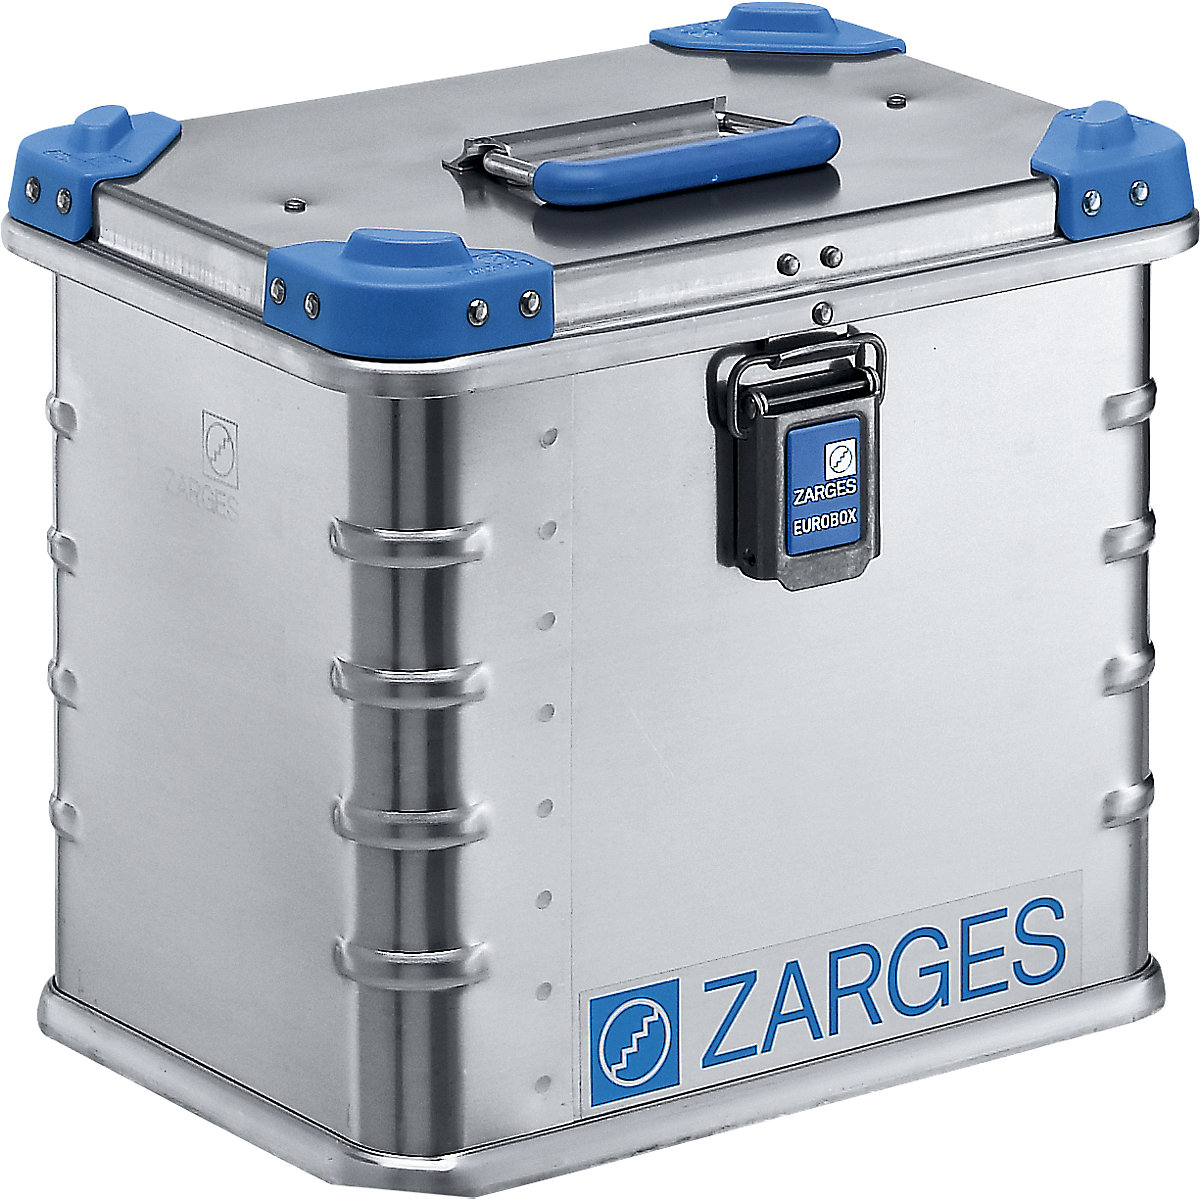 ZARGES Transport Boxes & Cases